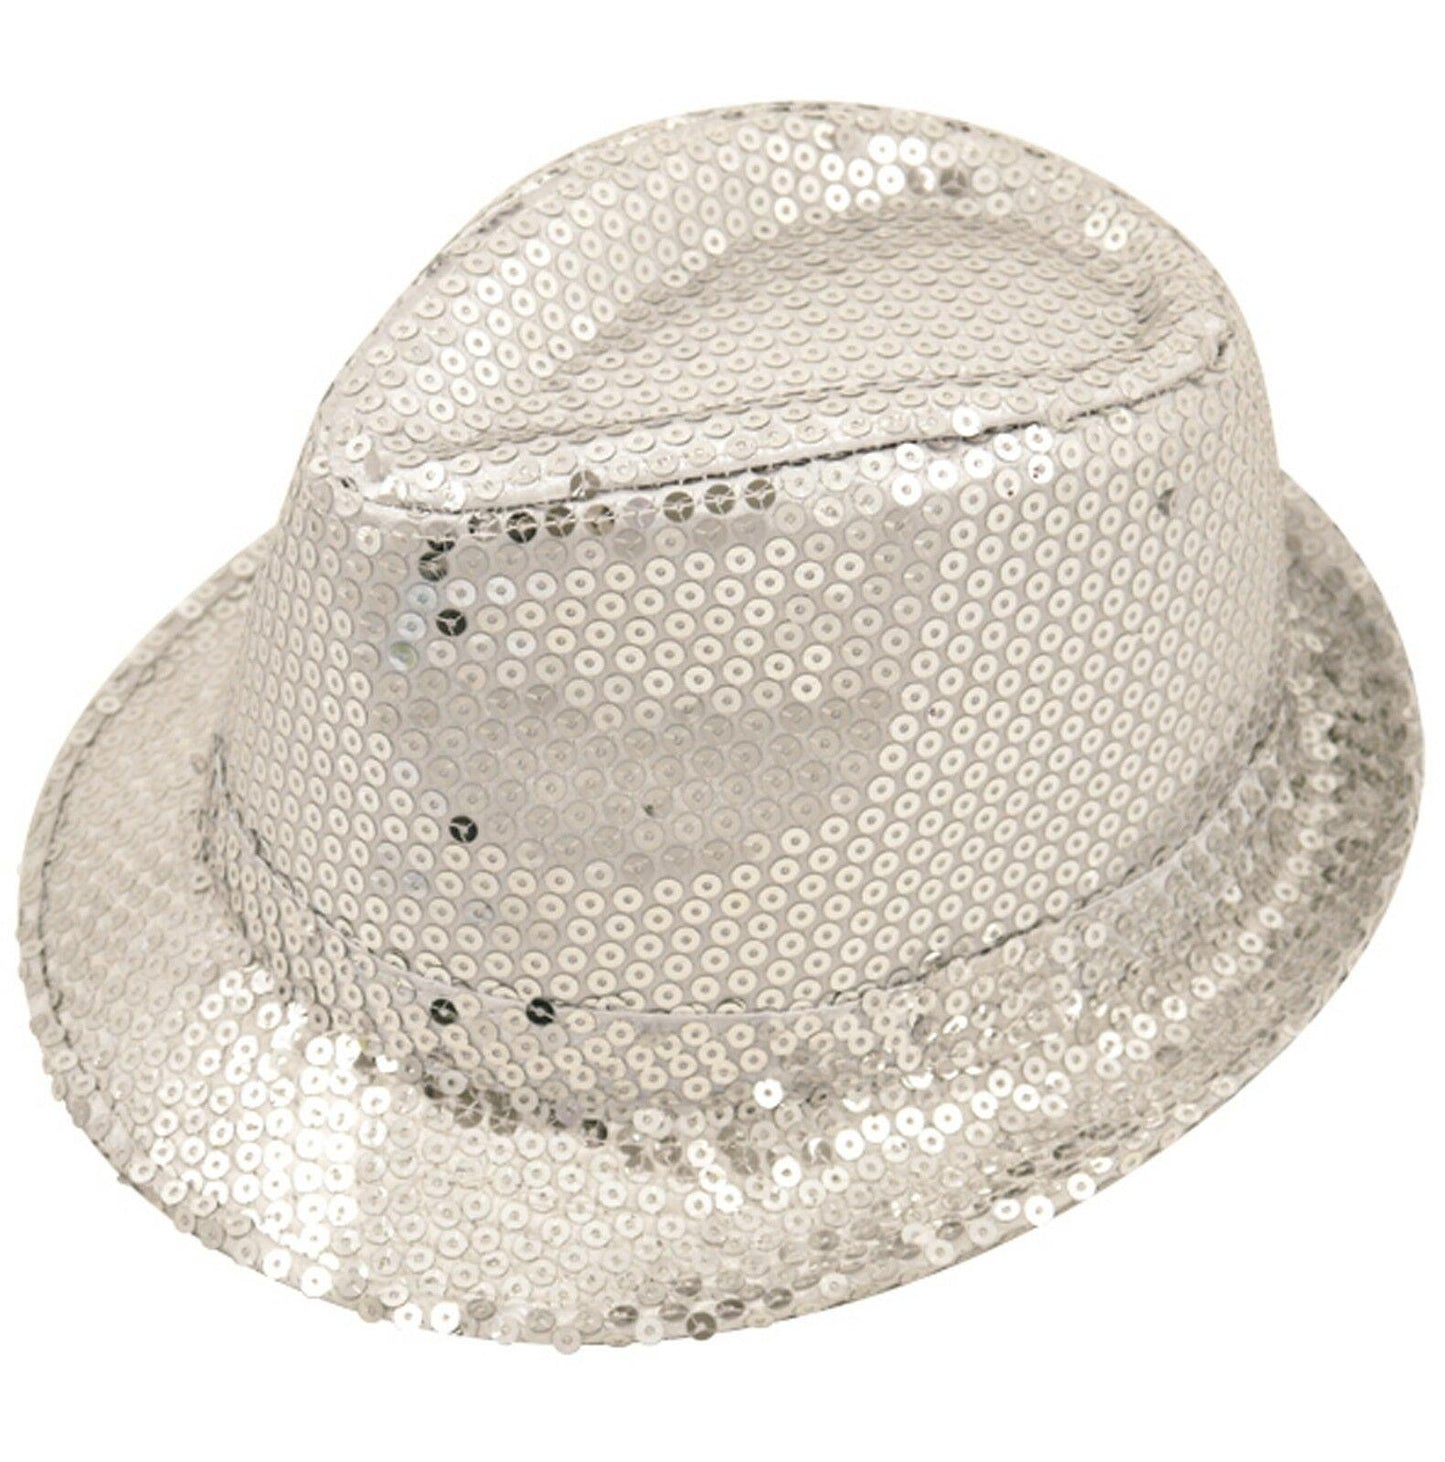 Unisex Sequin Gangster Hat Fedora Trilby Sequin Cap Hats Dance Party - Labreeze